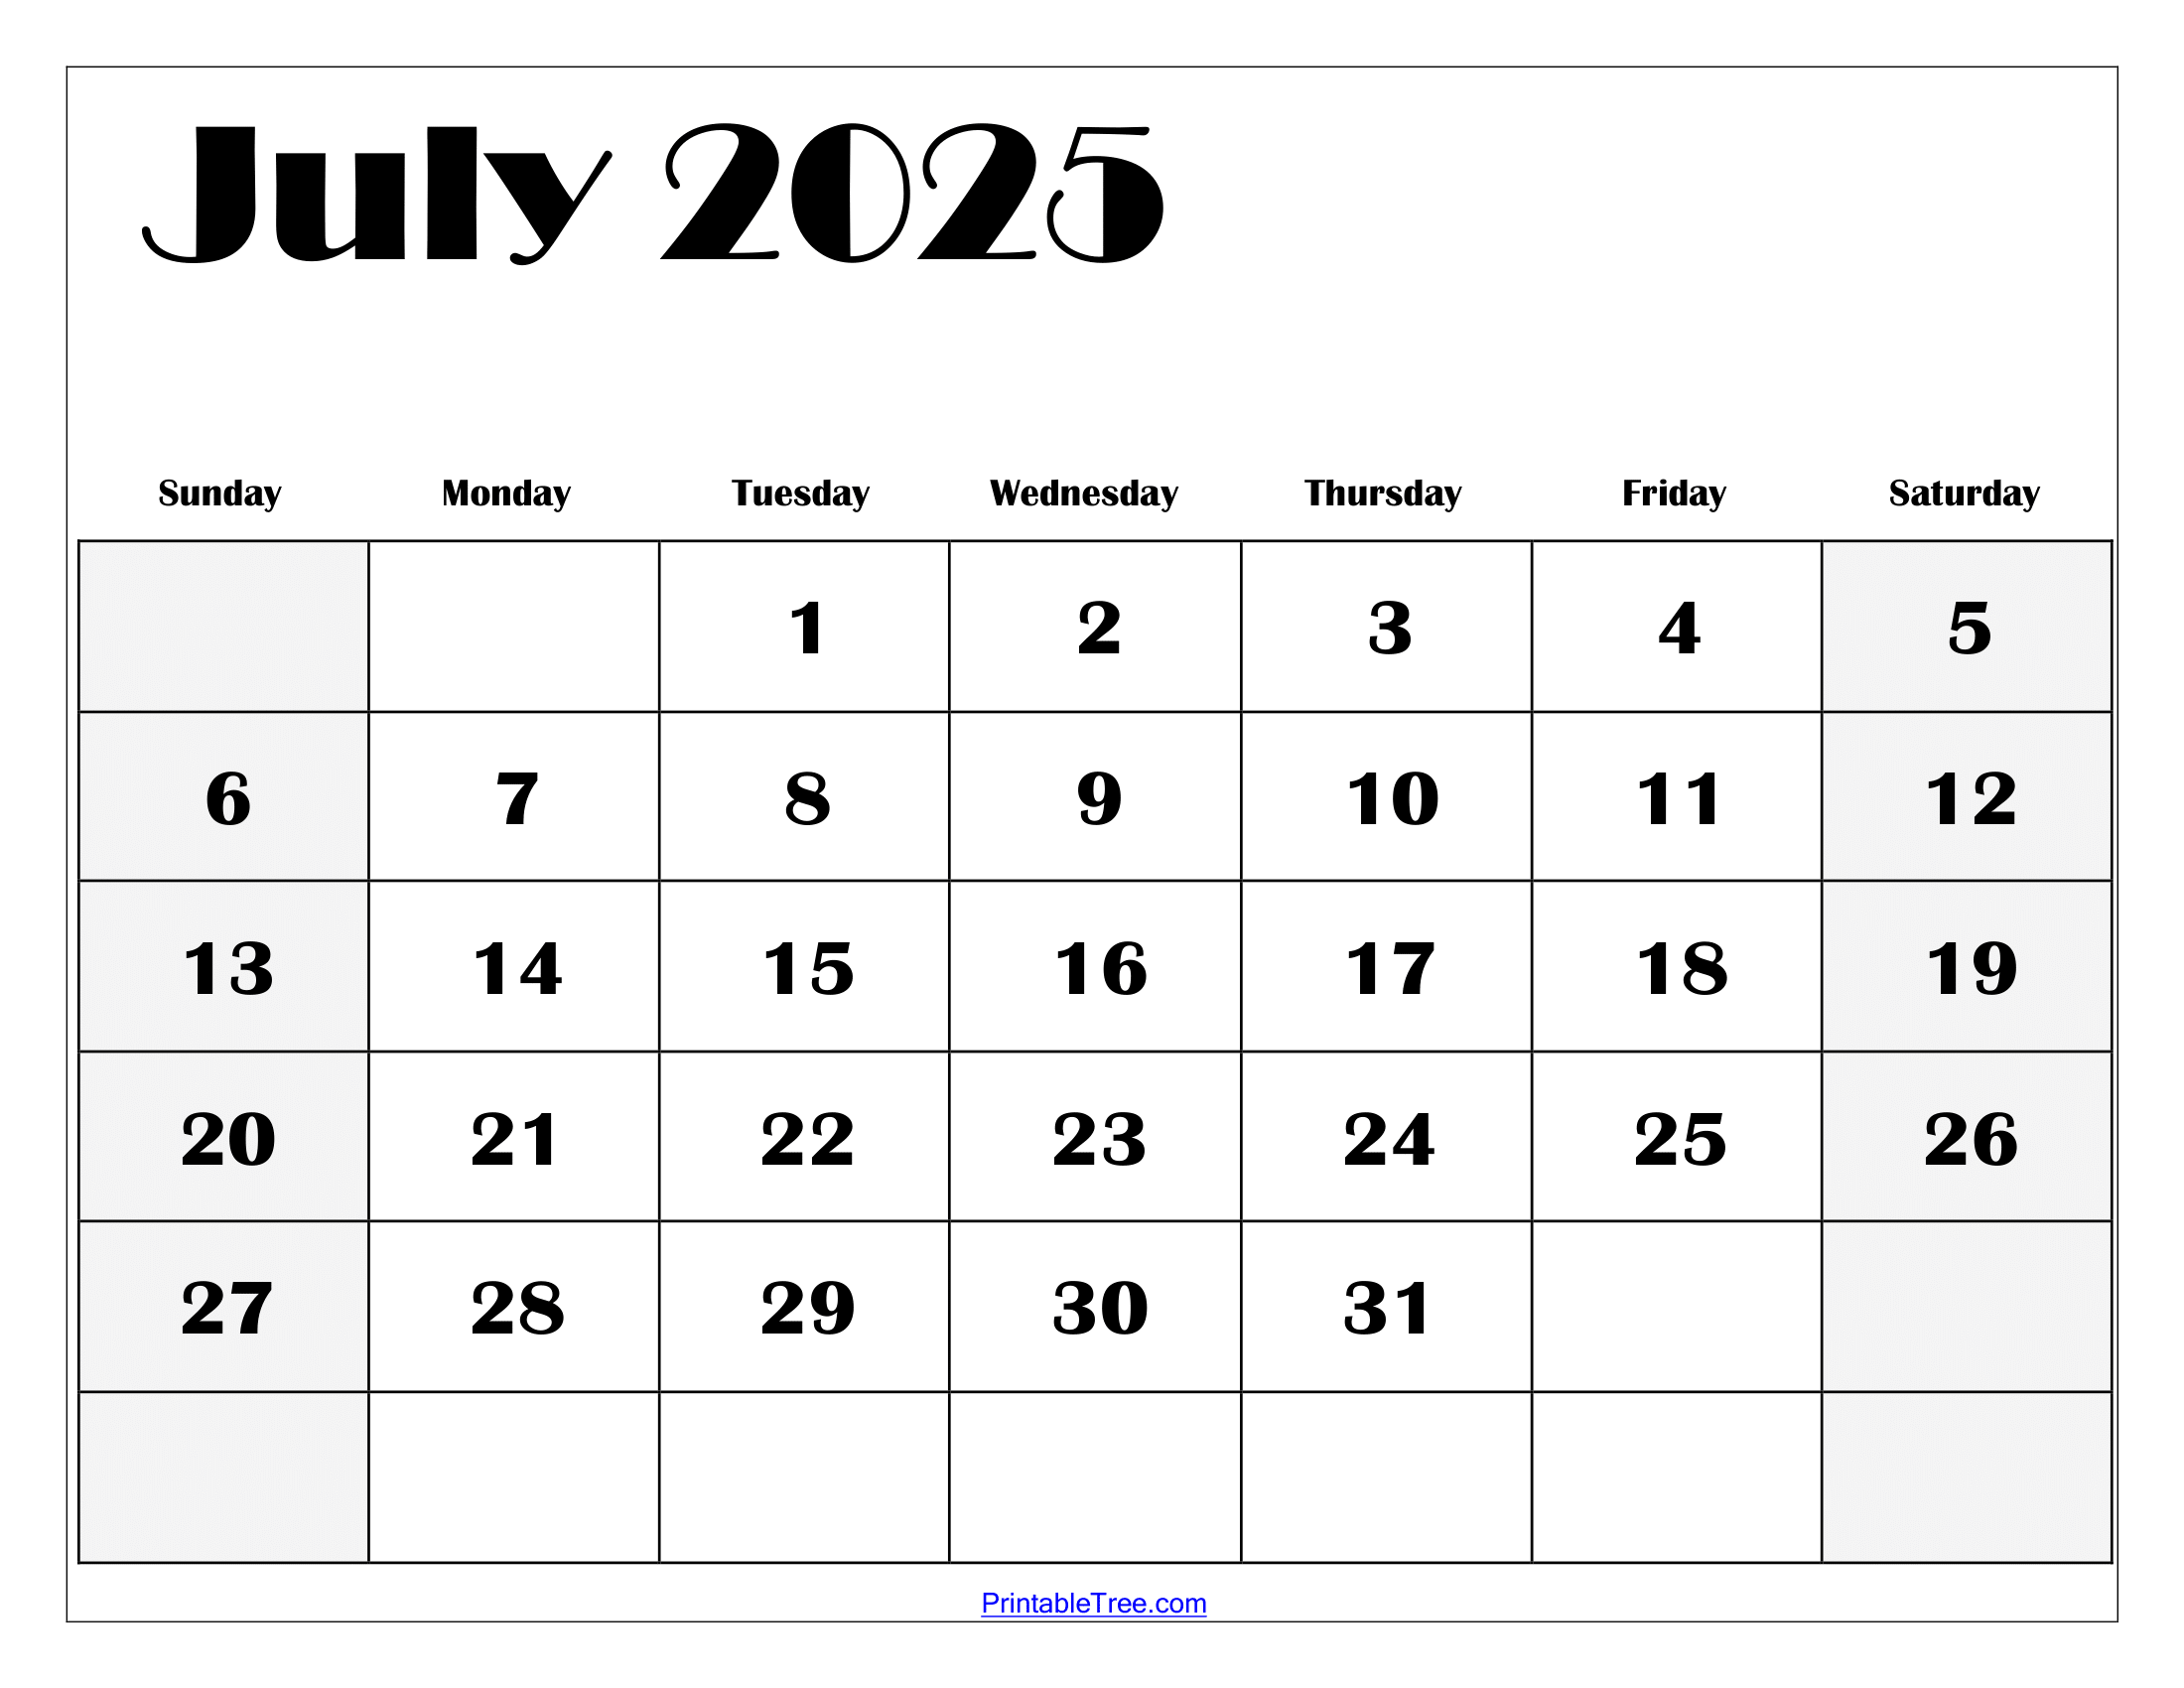 July 2025 Calendar Printable Pdf Template With Holidays regarding Calendar For July 2025